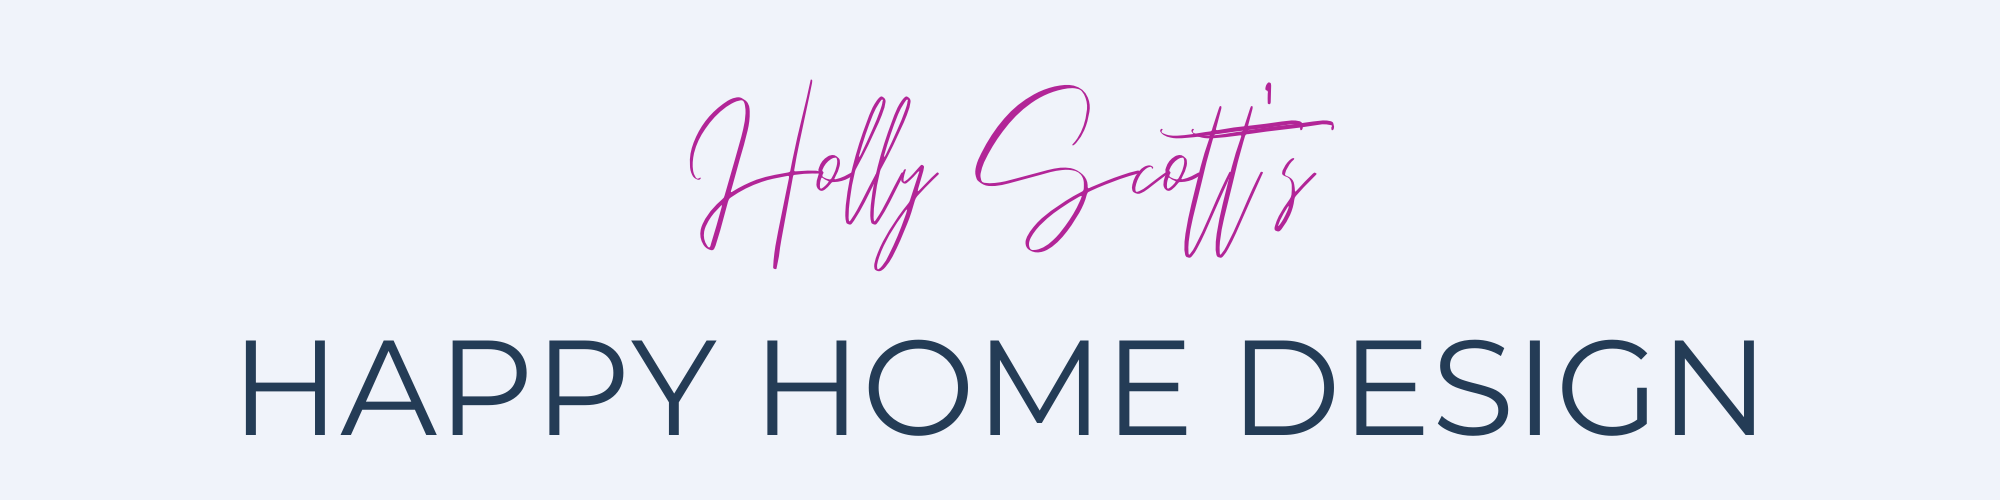 Holly Scott Interior Design